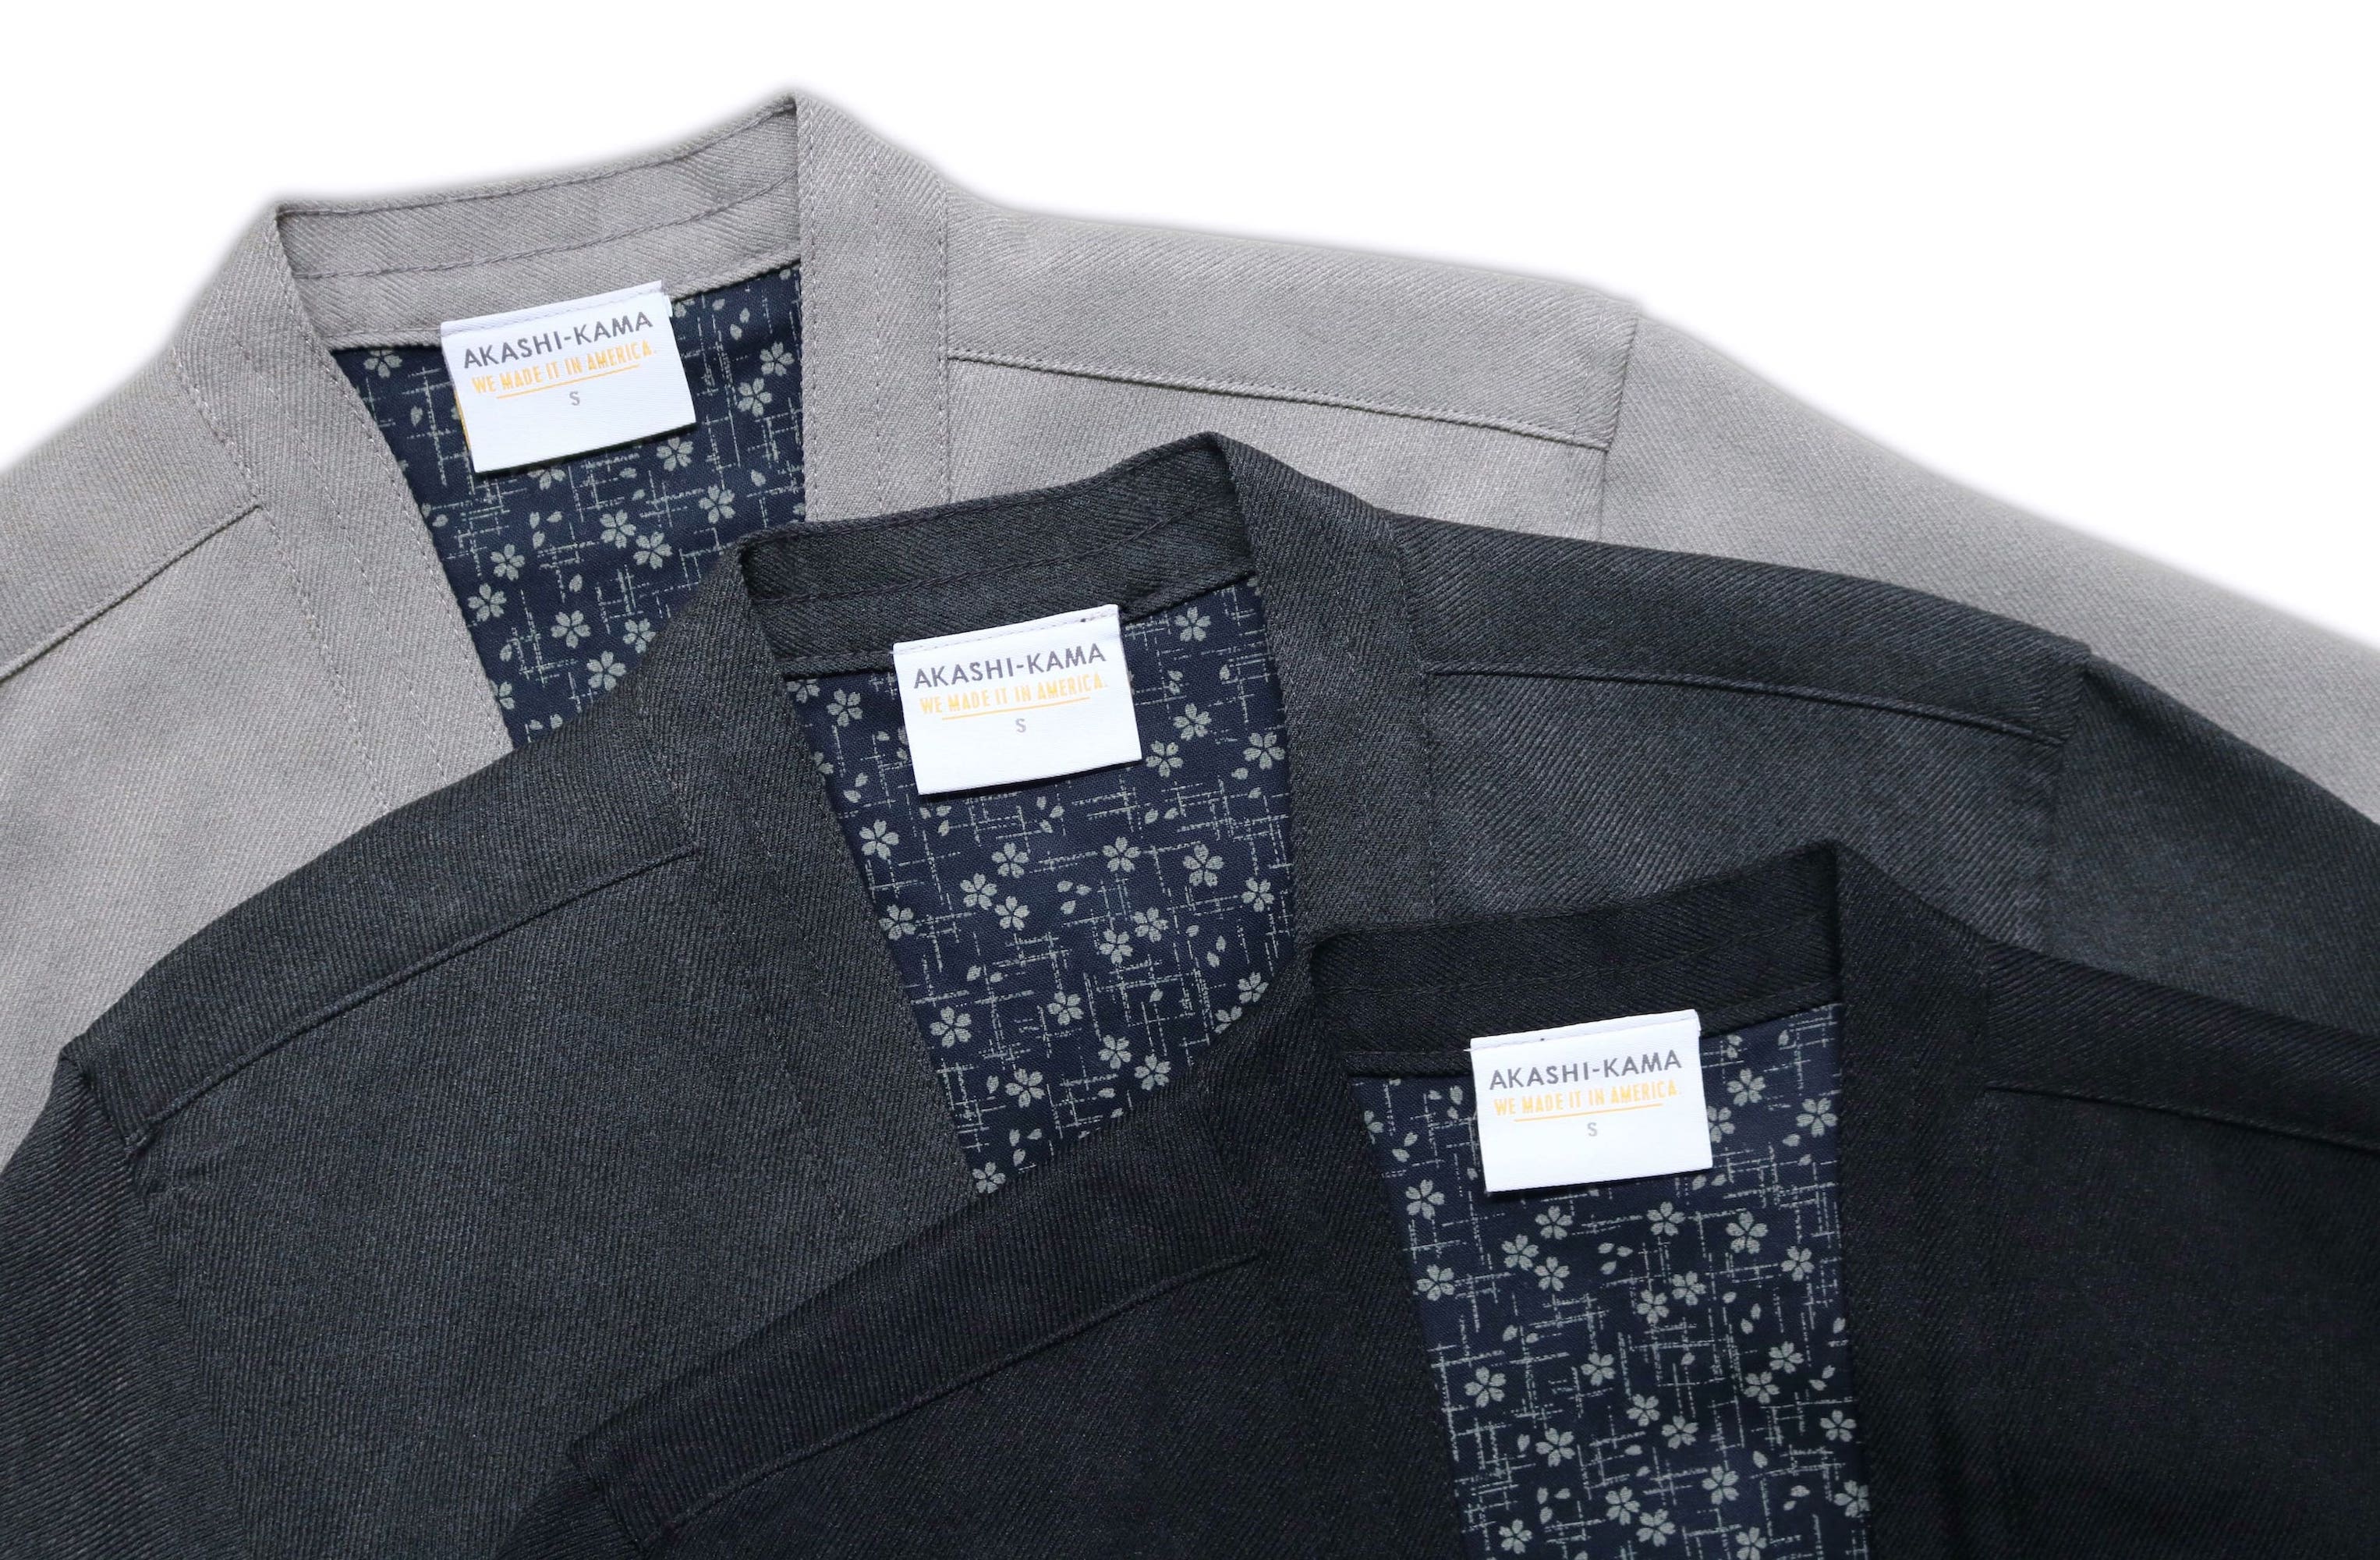 Shades of Grey: NEW ARRIVALS: Men's Robe Coat & Patchwork Noragi